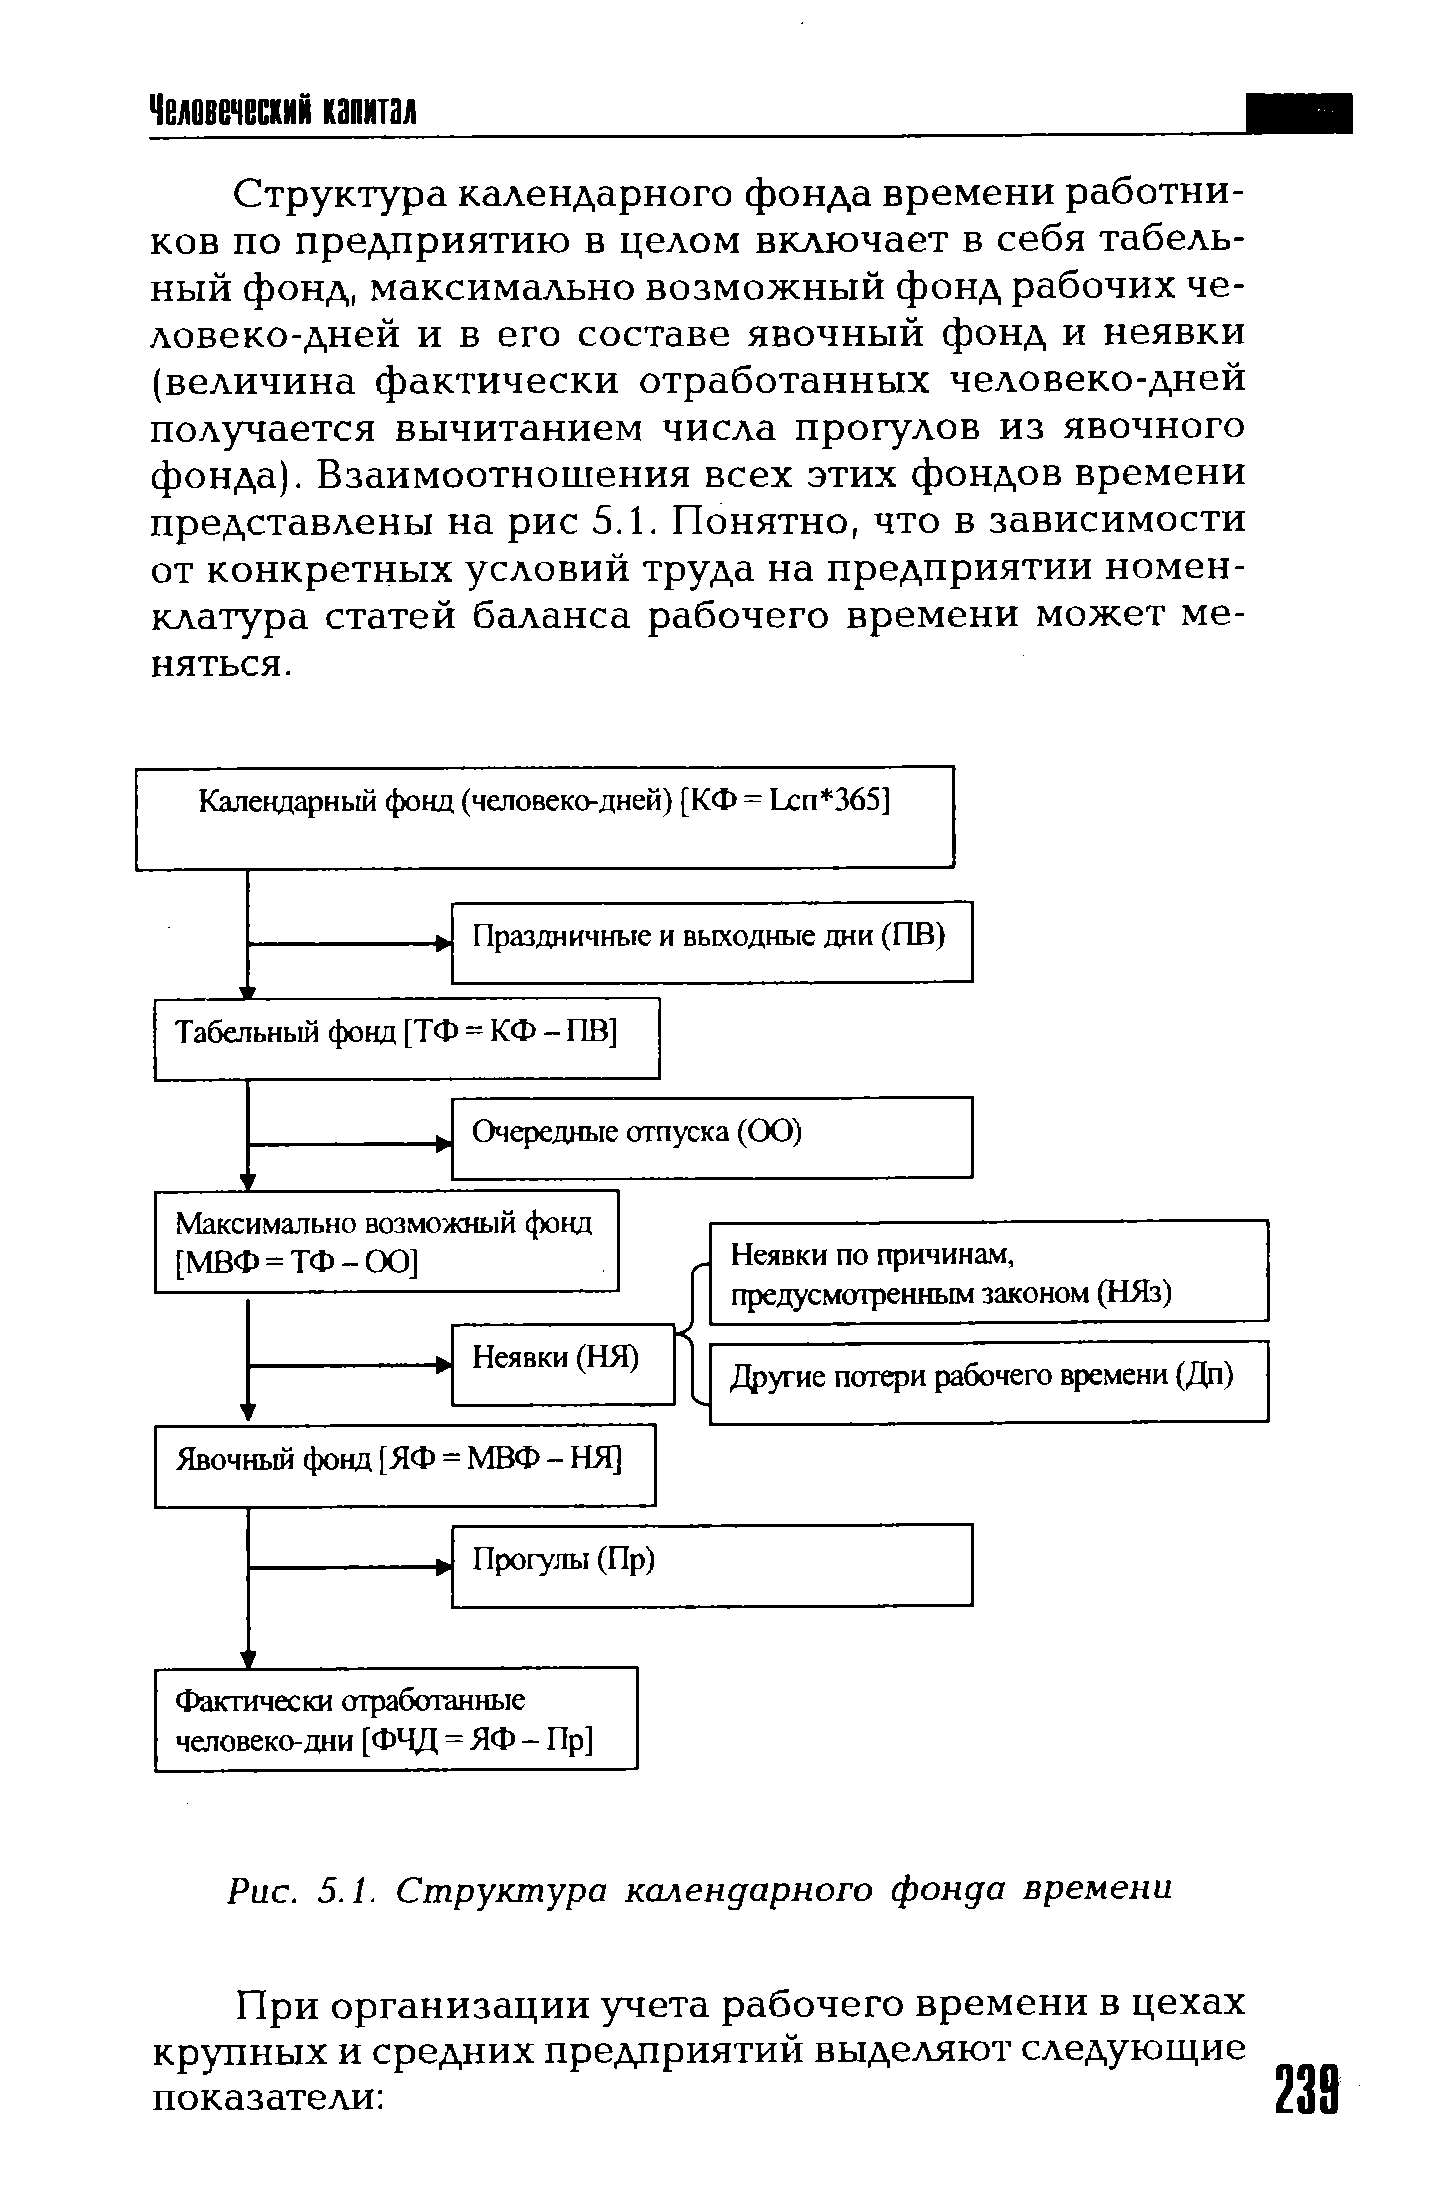 Рис. 5.1. Структура календарного фонда времени
